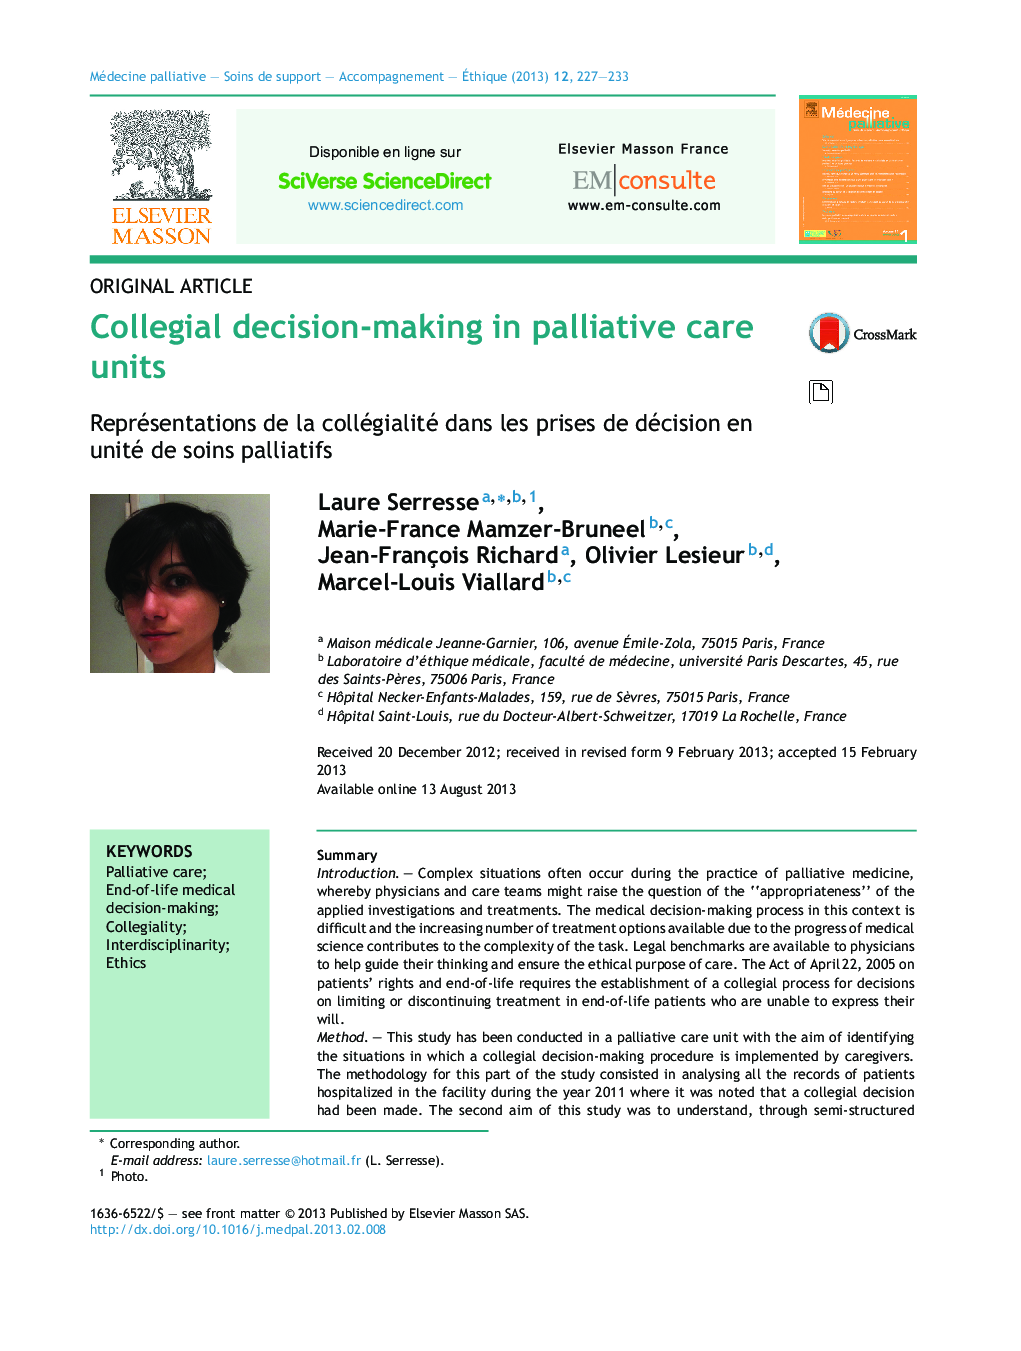 Collegial decision-making in palliative care units